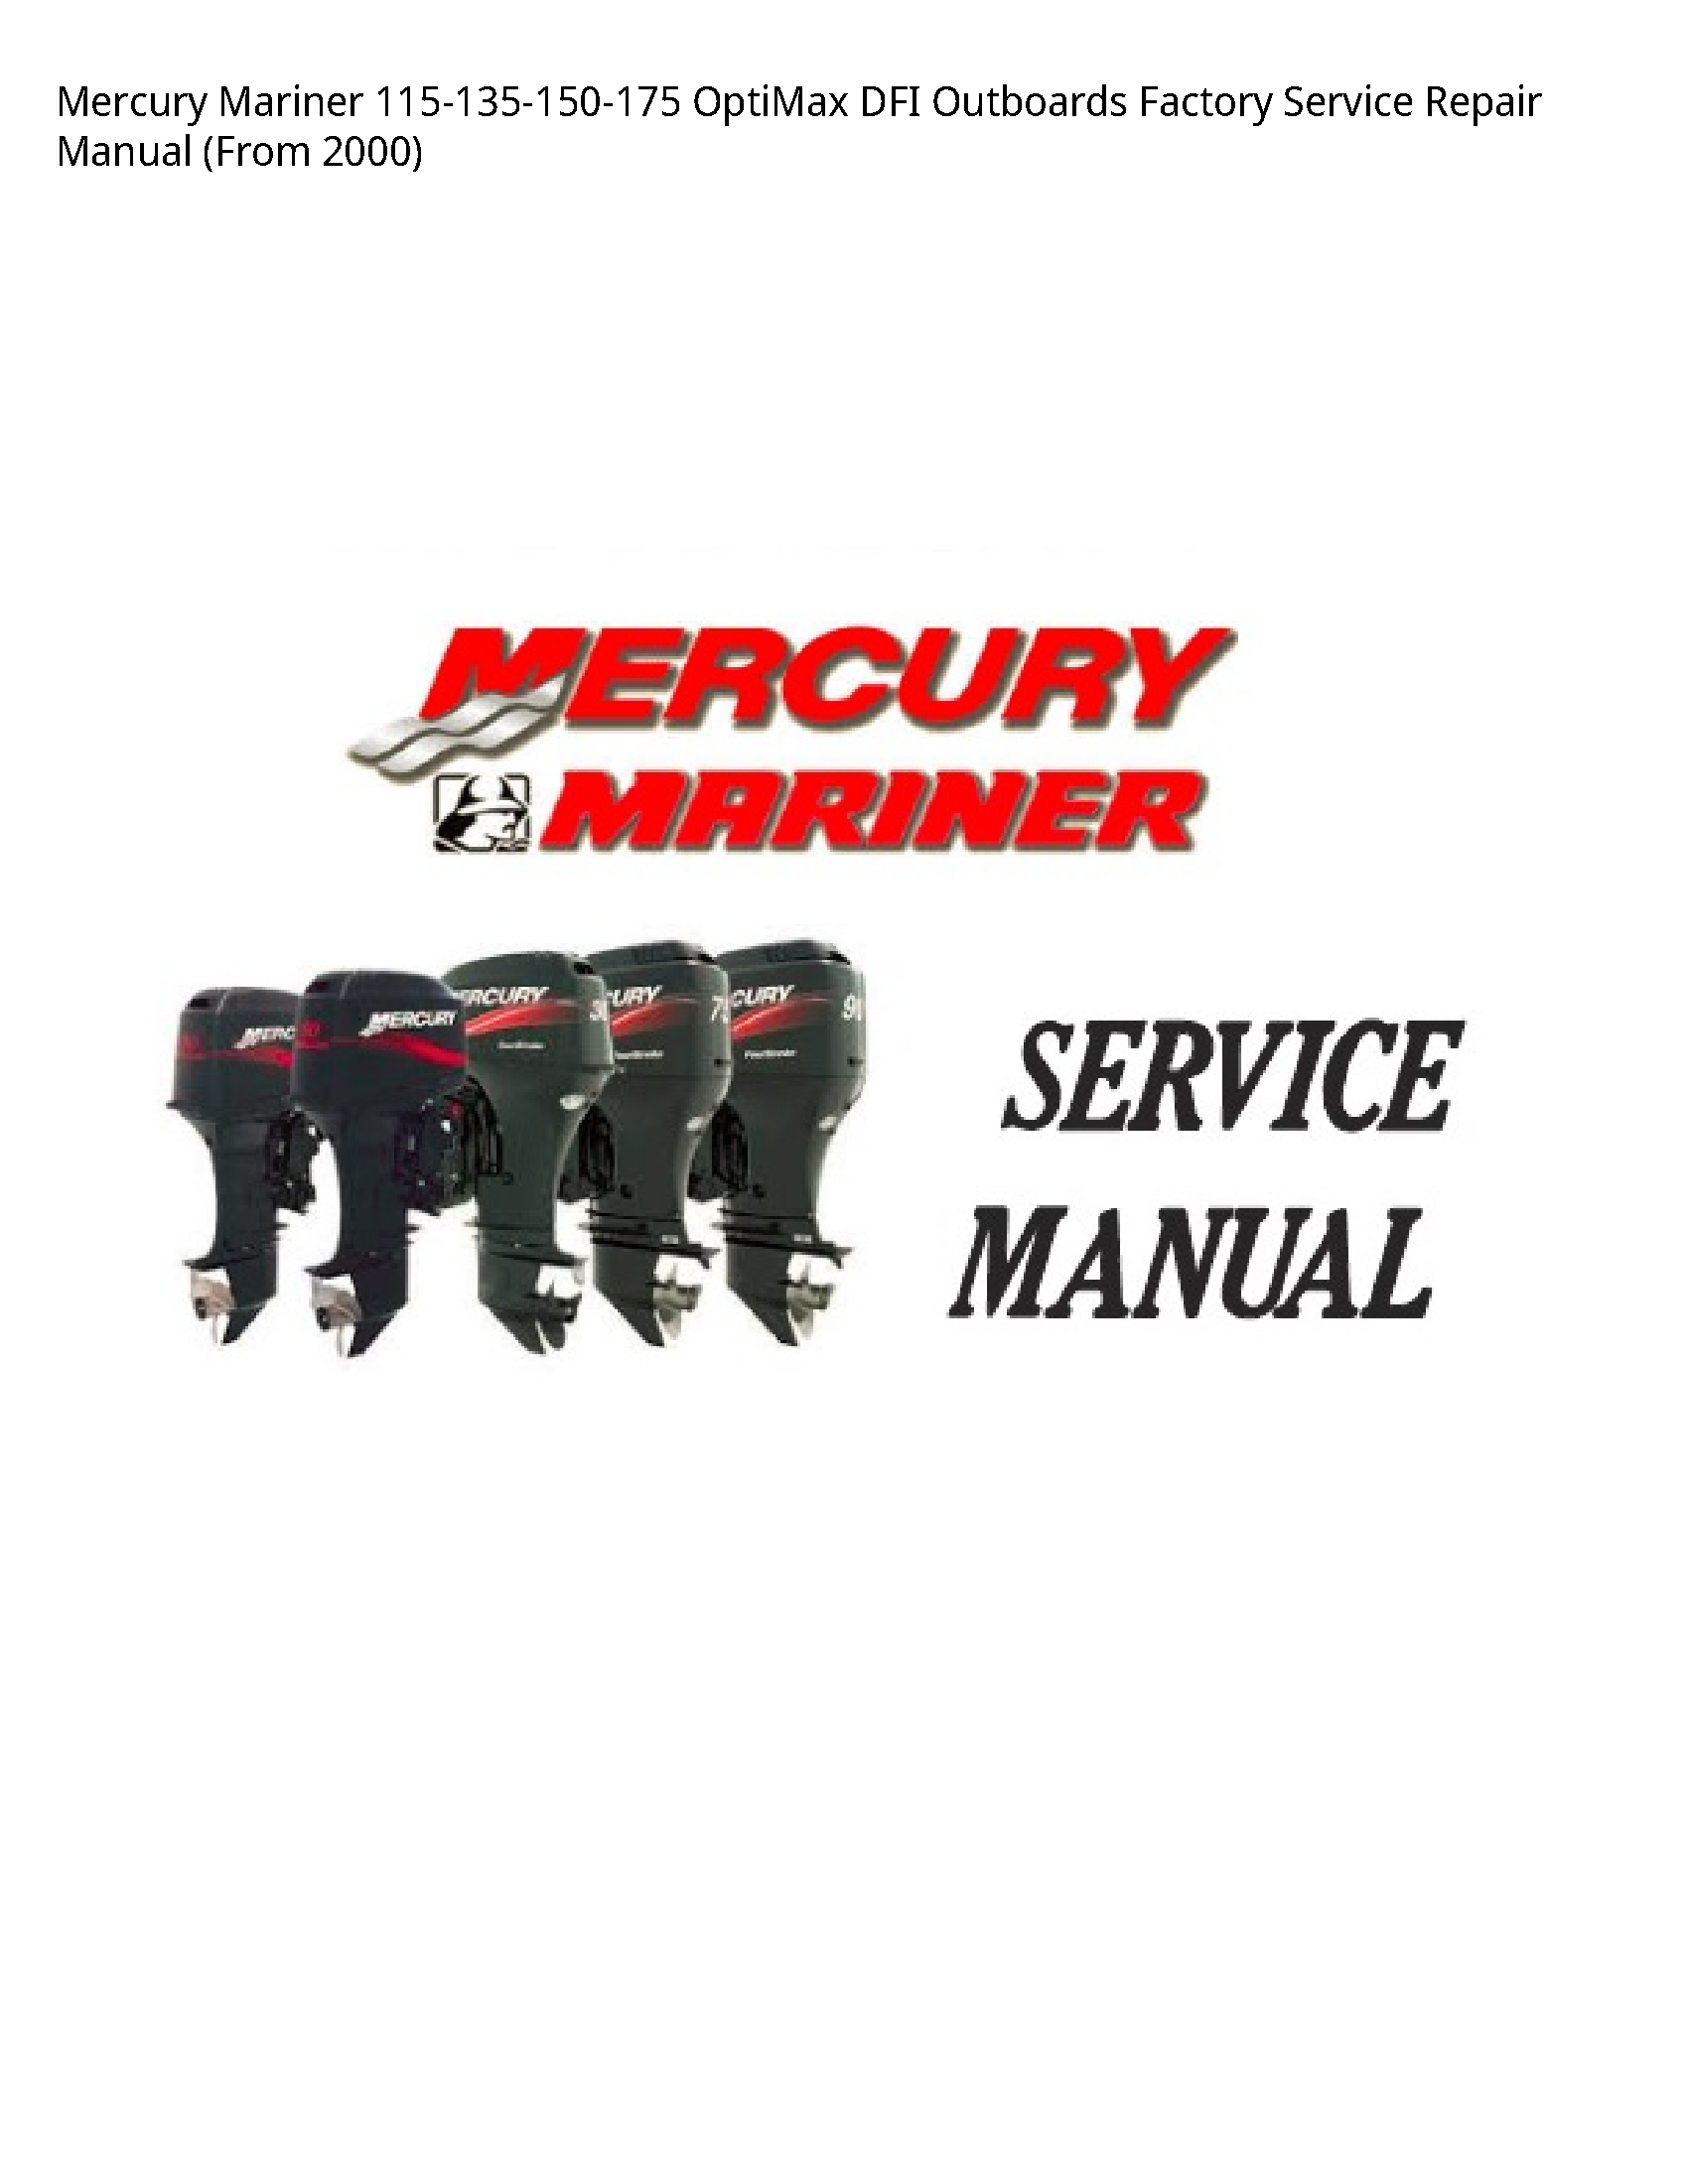 Mercury Mariner 115-135-150-175 OptiMax DFI Outboards Factory manual